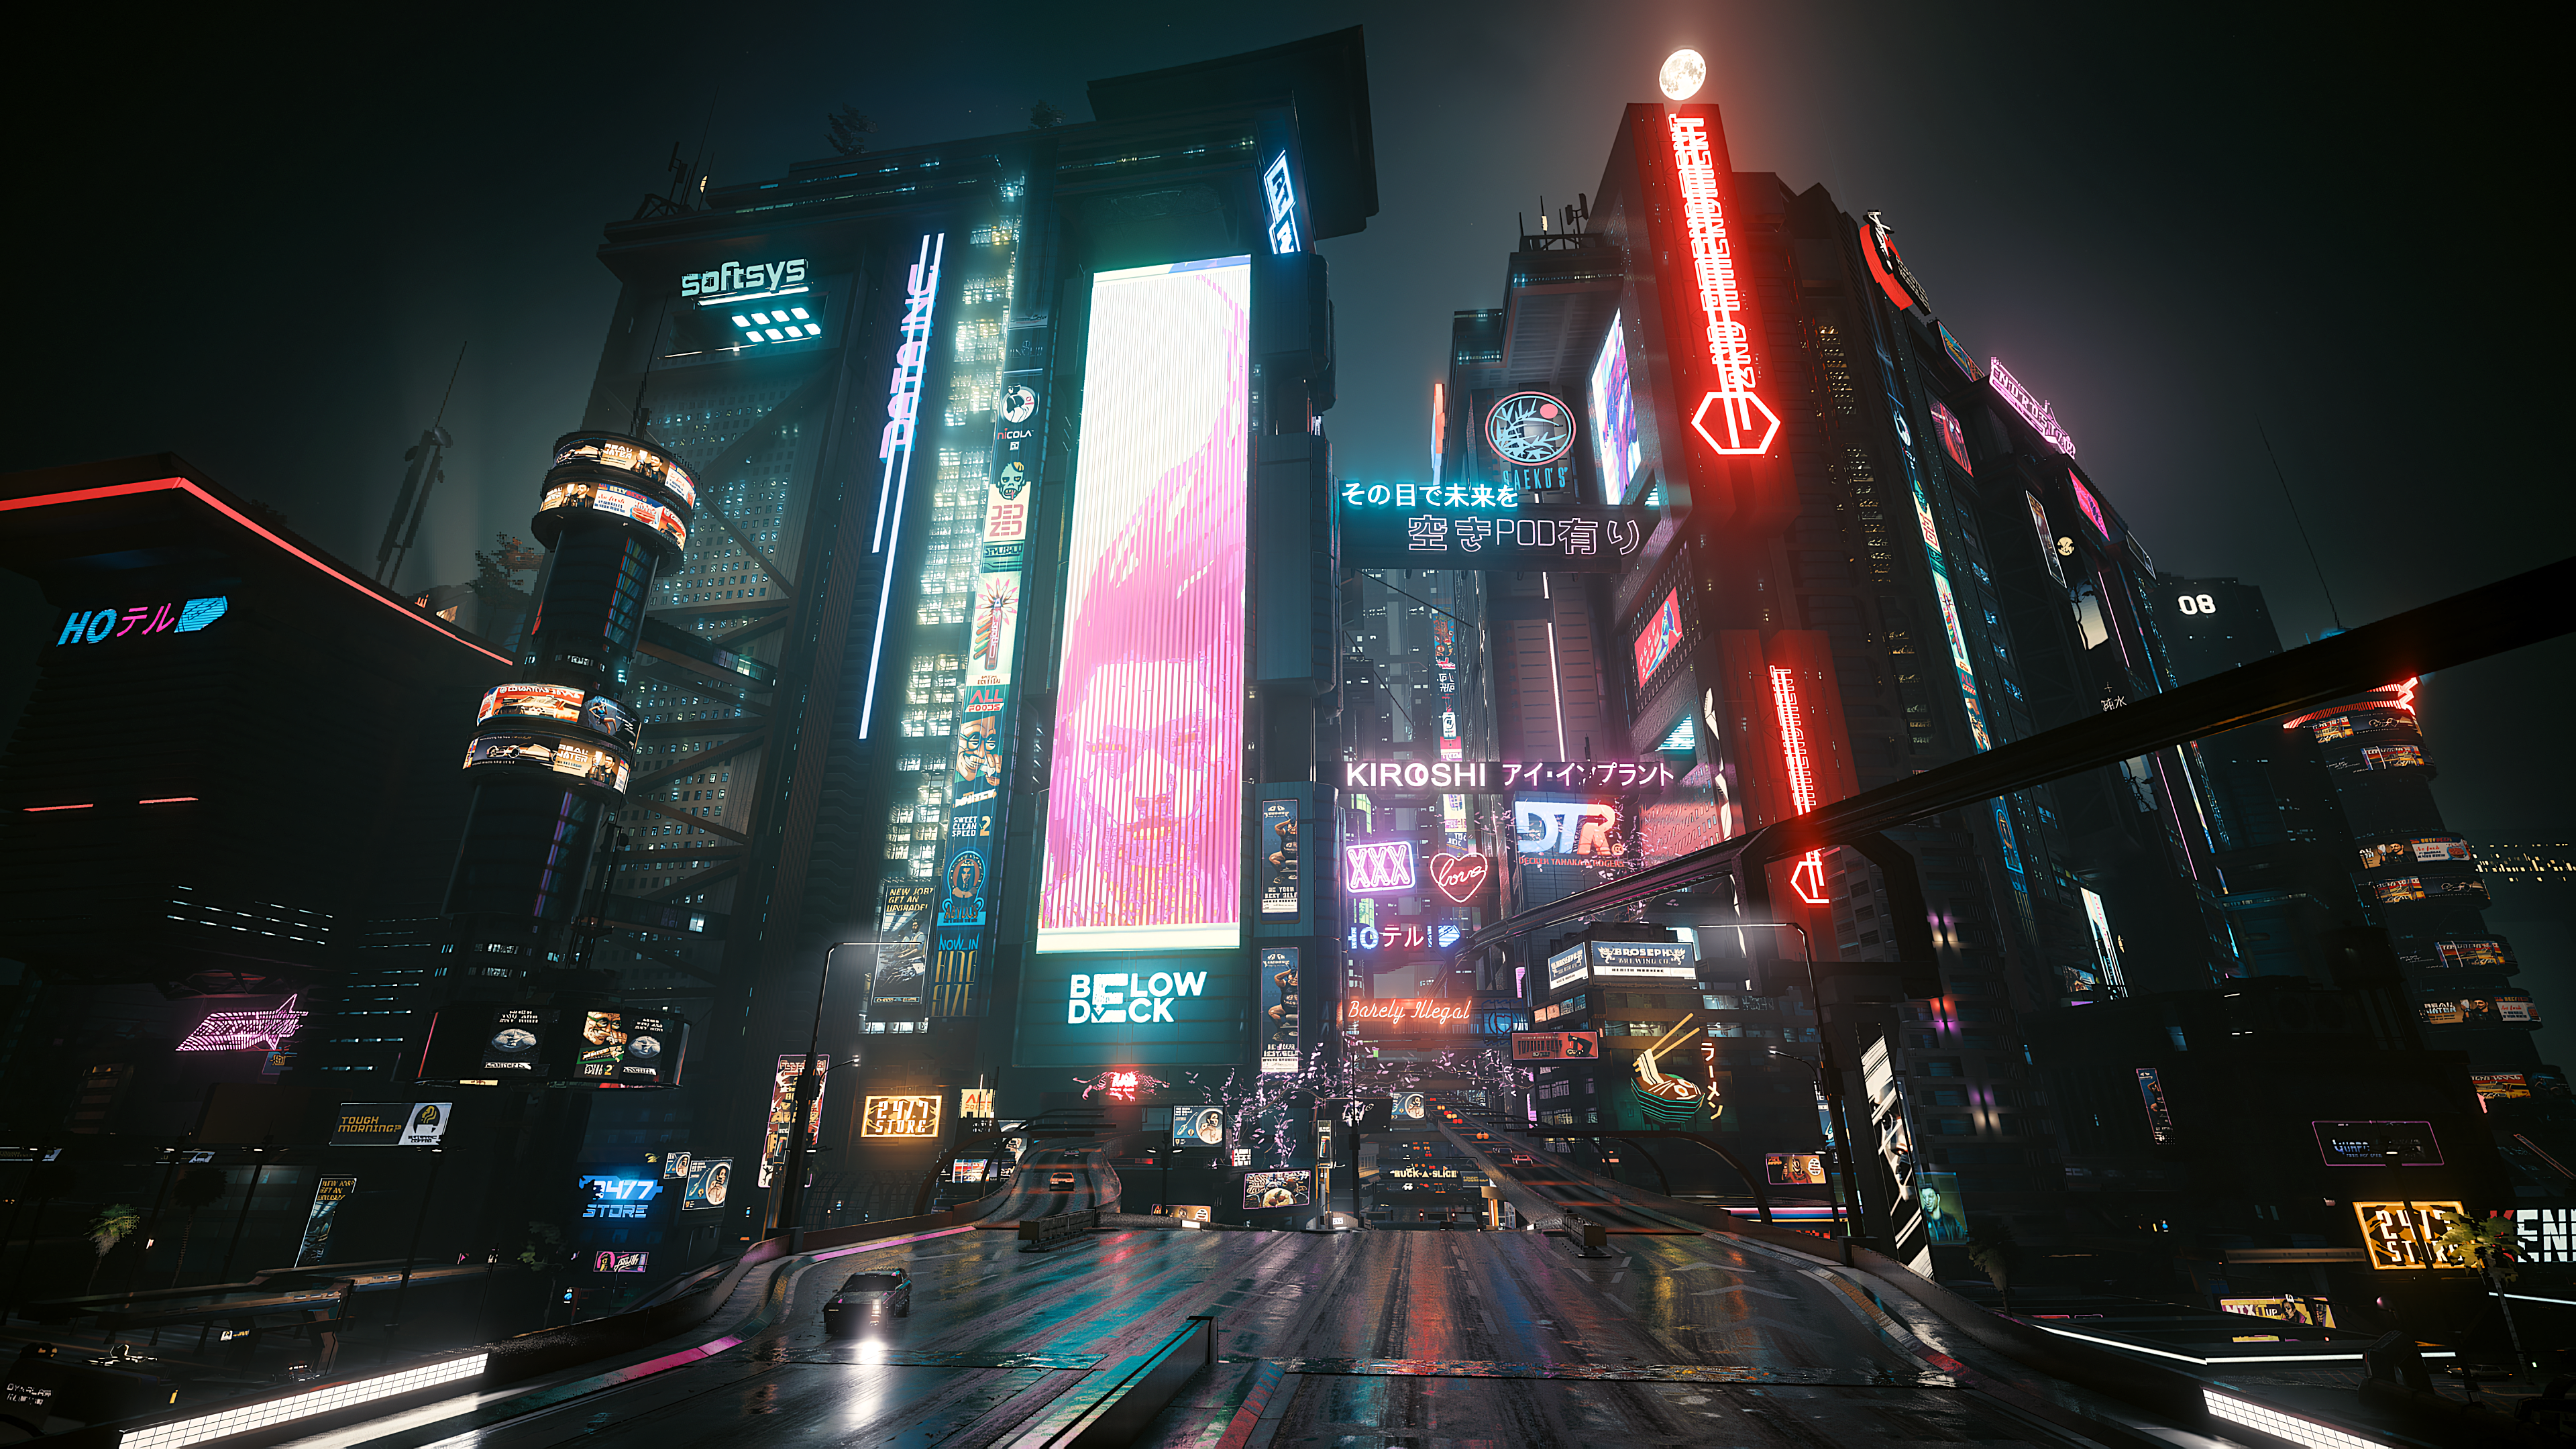 City Futuristic Futurism Science Fiction Fictional Cyberpunk Cyberpunk 2077 Car Wet Road Dark Night  3840x2160